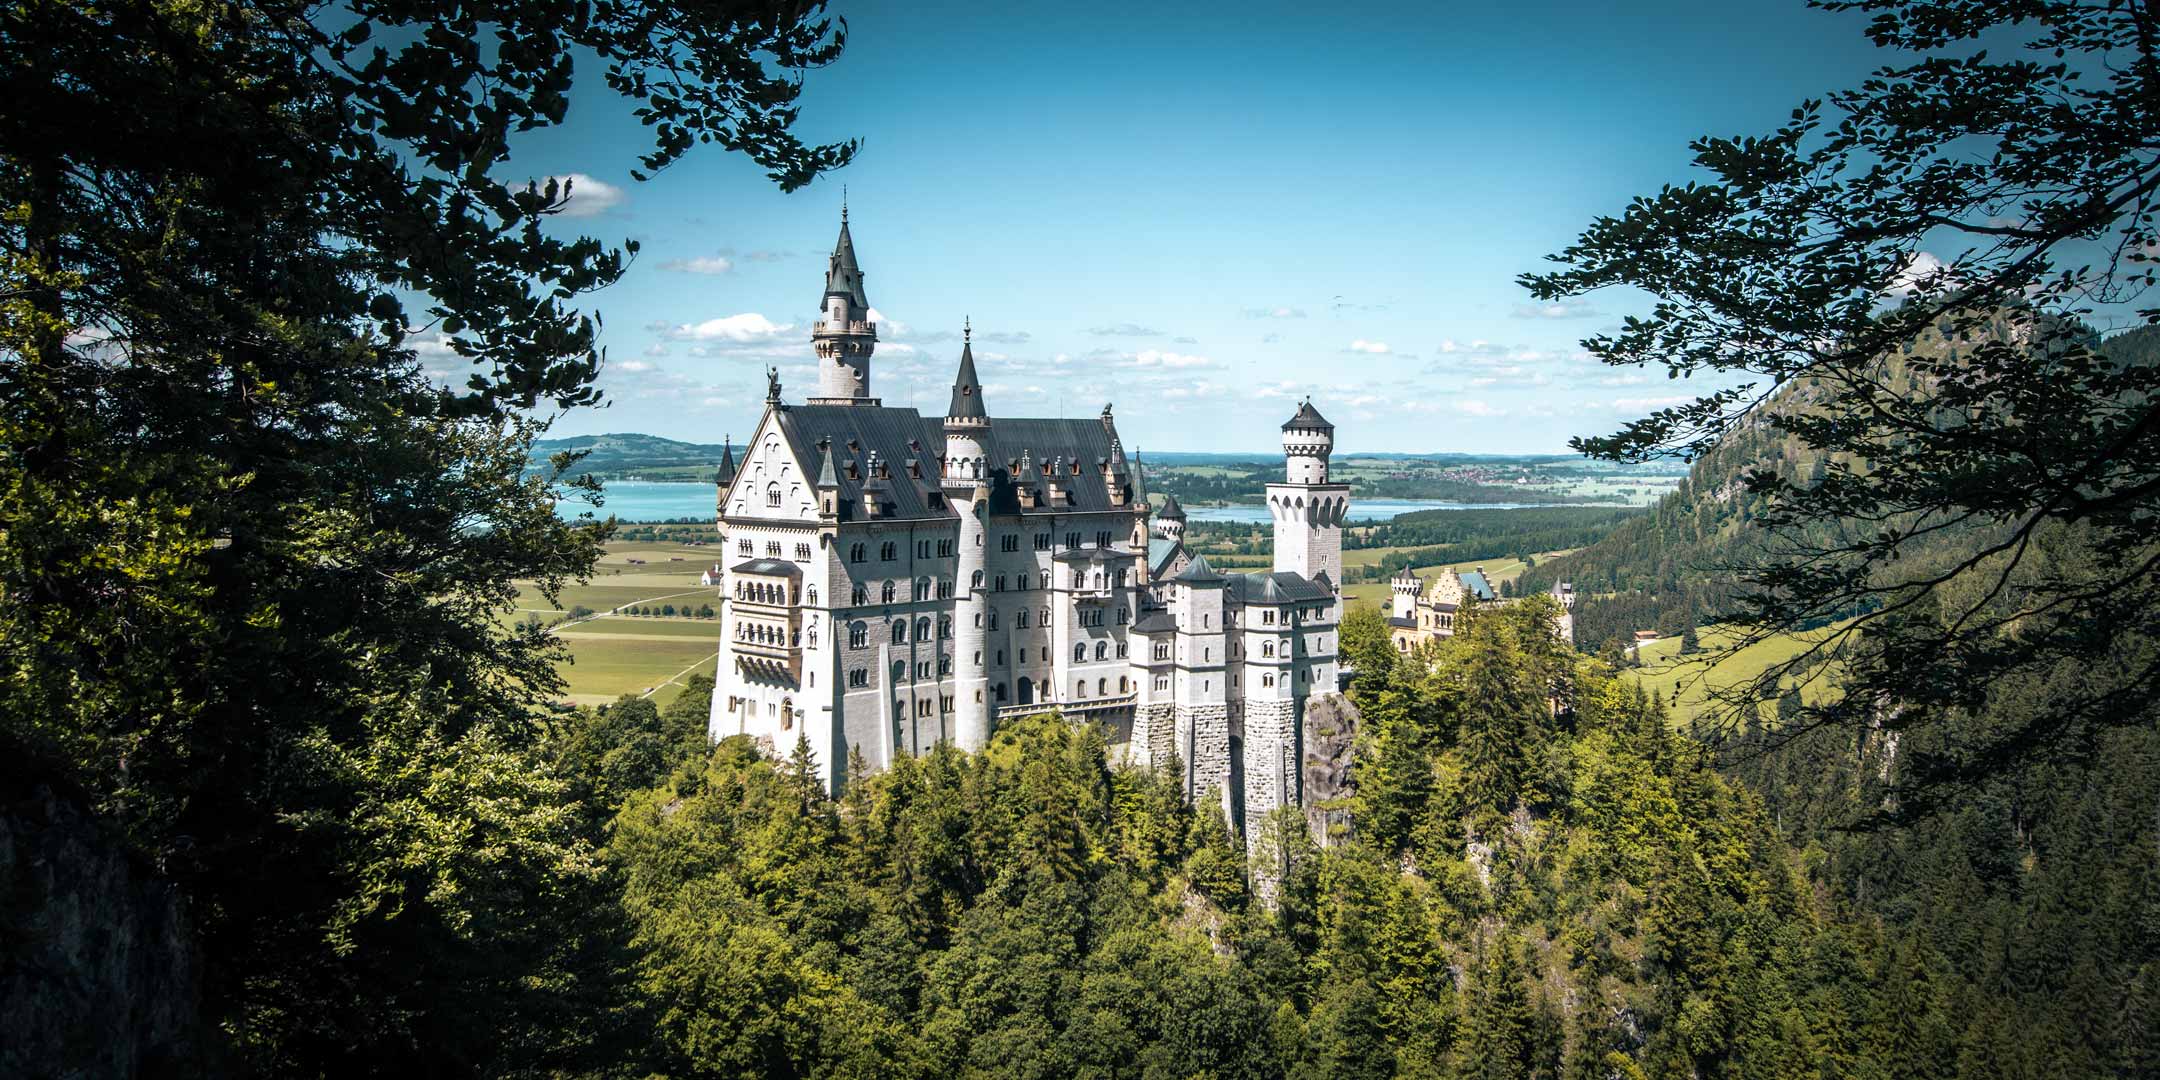 How to Get From Munich to Neuschwanstein Castle: The Fairytale Day Trip